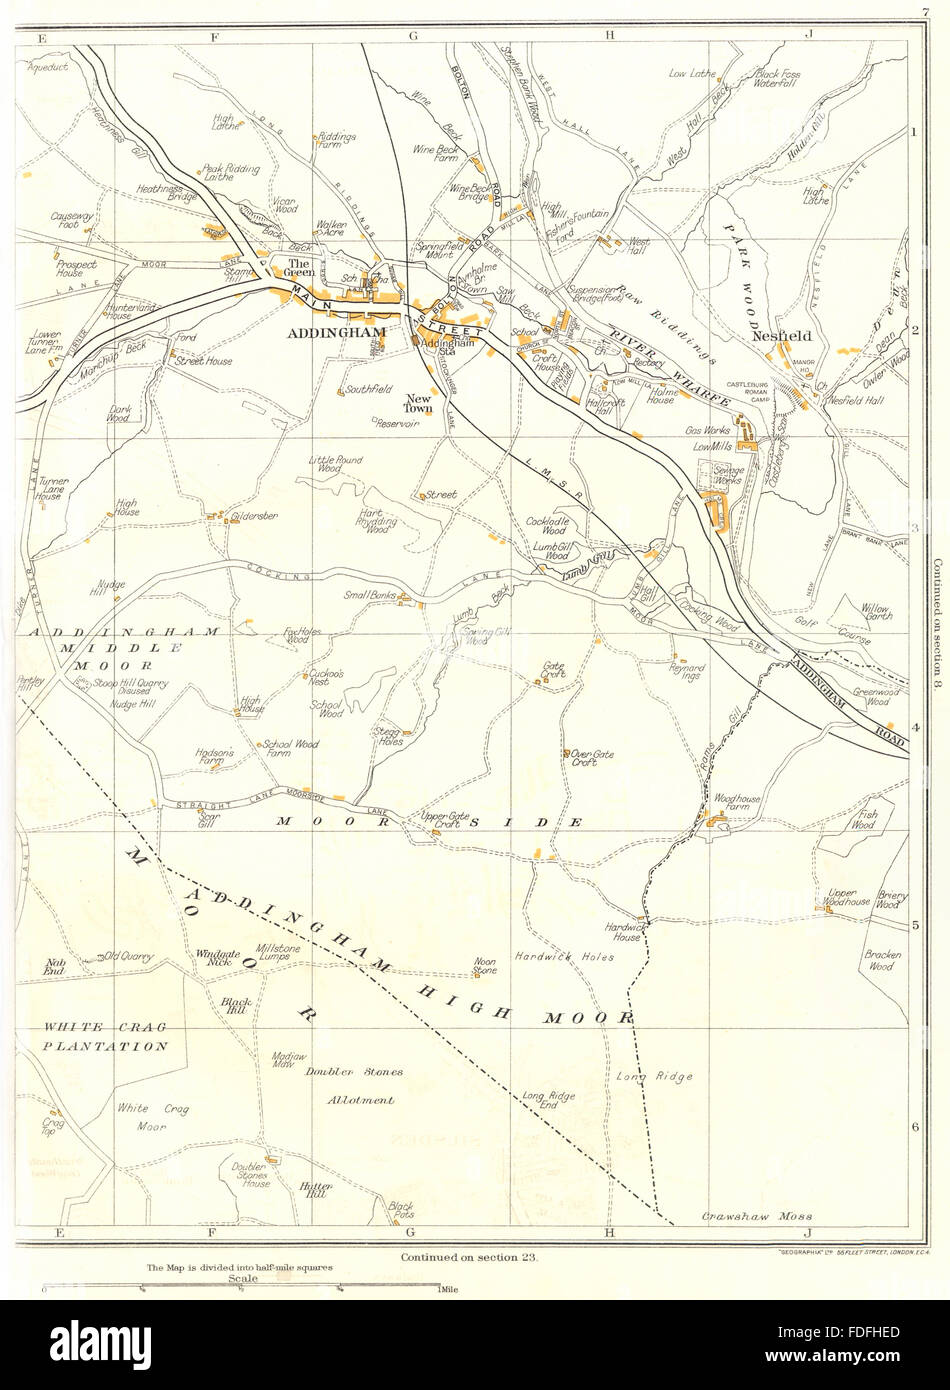 YORKS:Addingham,Addingham Middle Moo,Nesfield,Grawshaw Moss,Lumb Gill, 1935 map Stock Photo